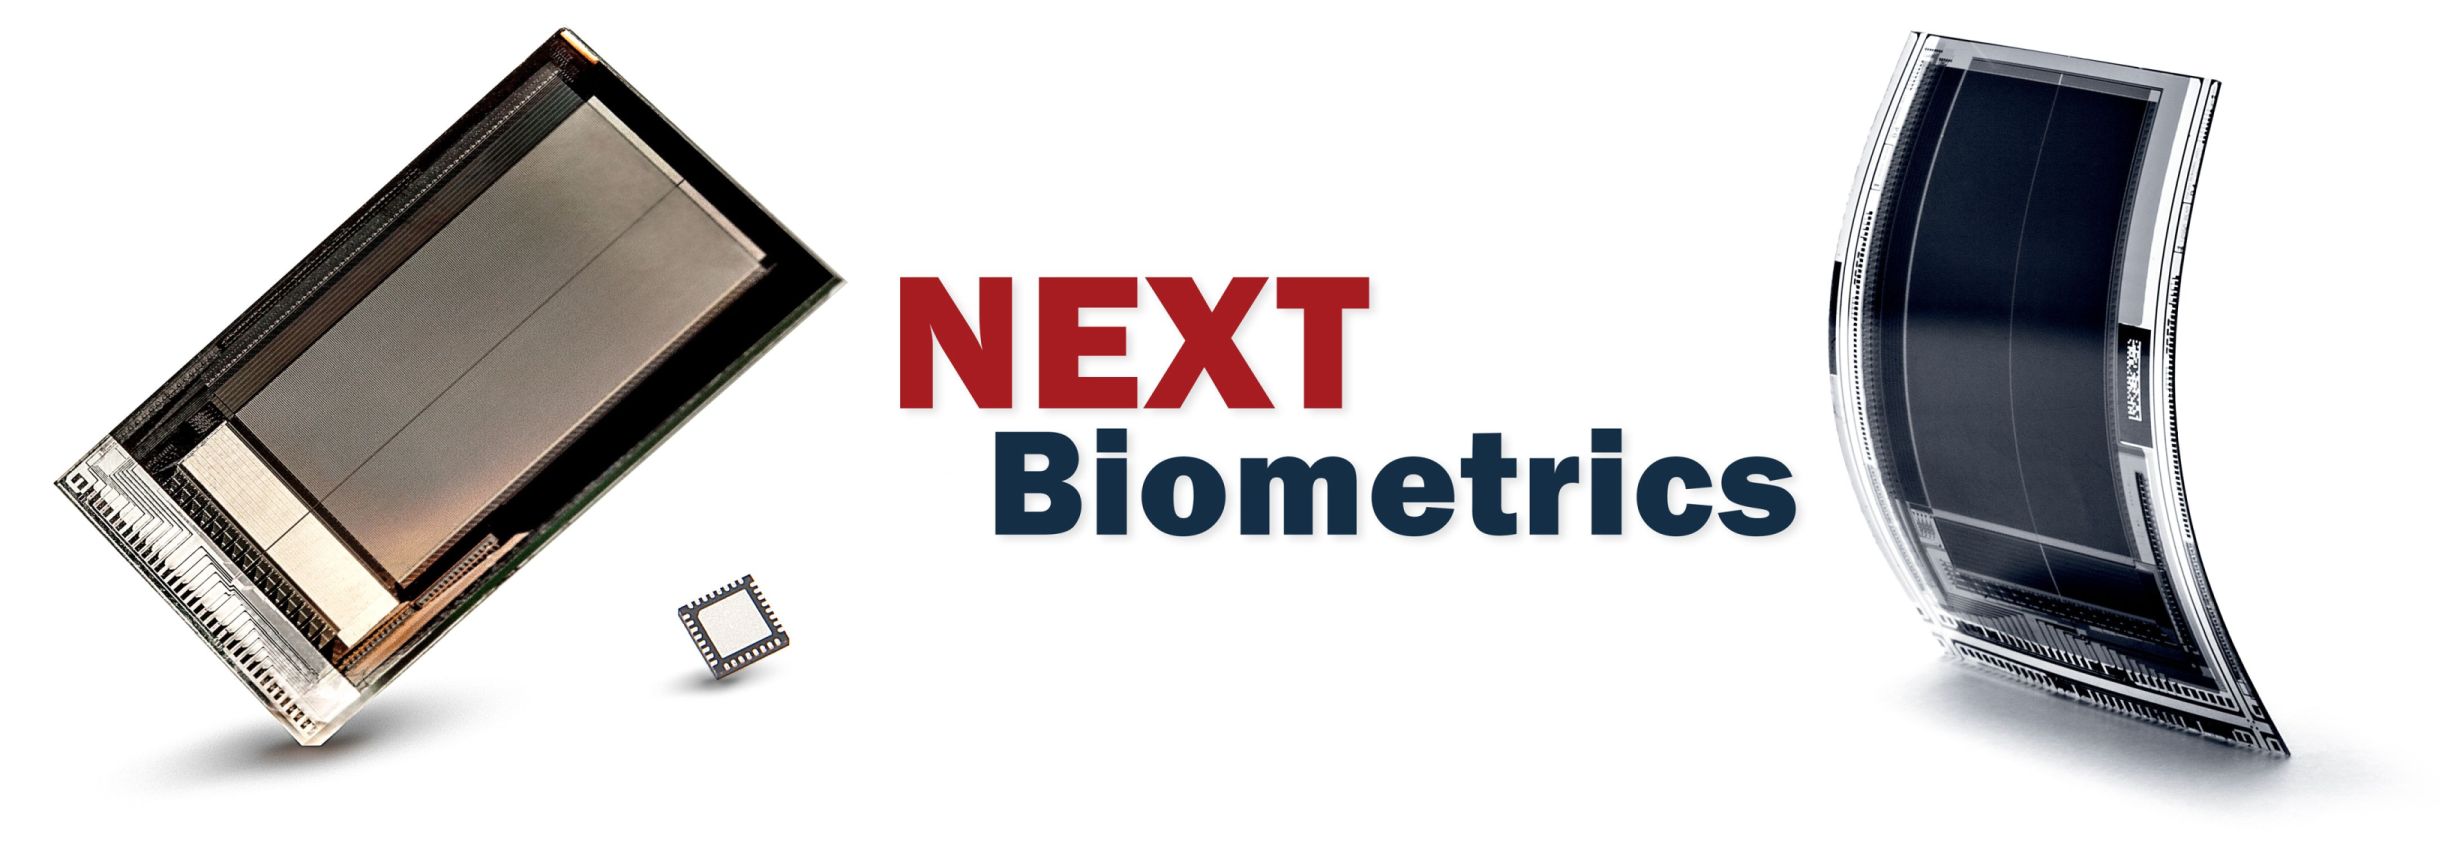 NEXT Biometrics Grou